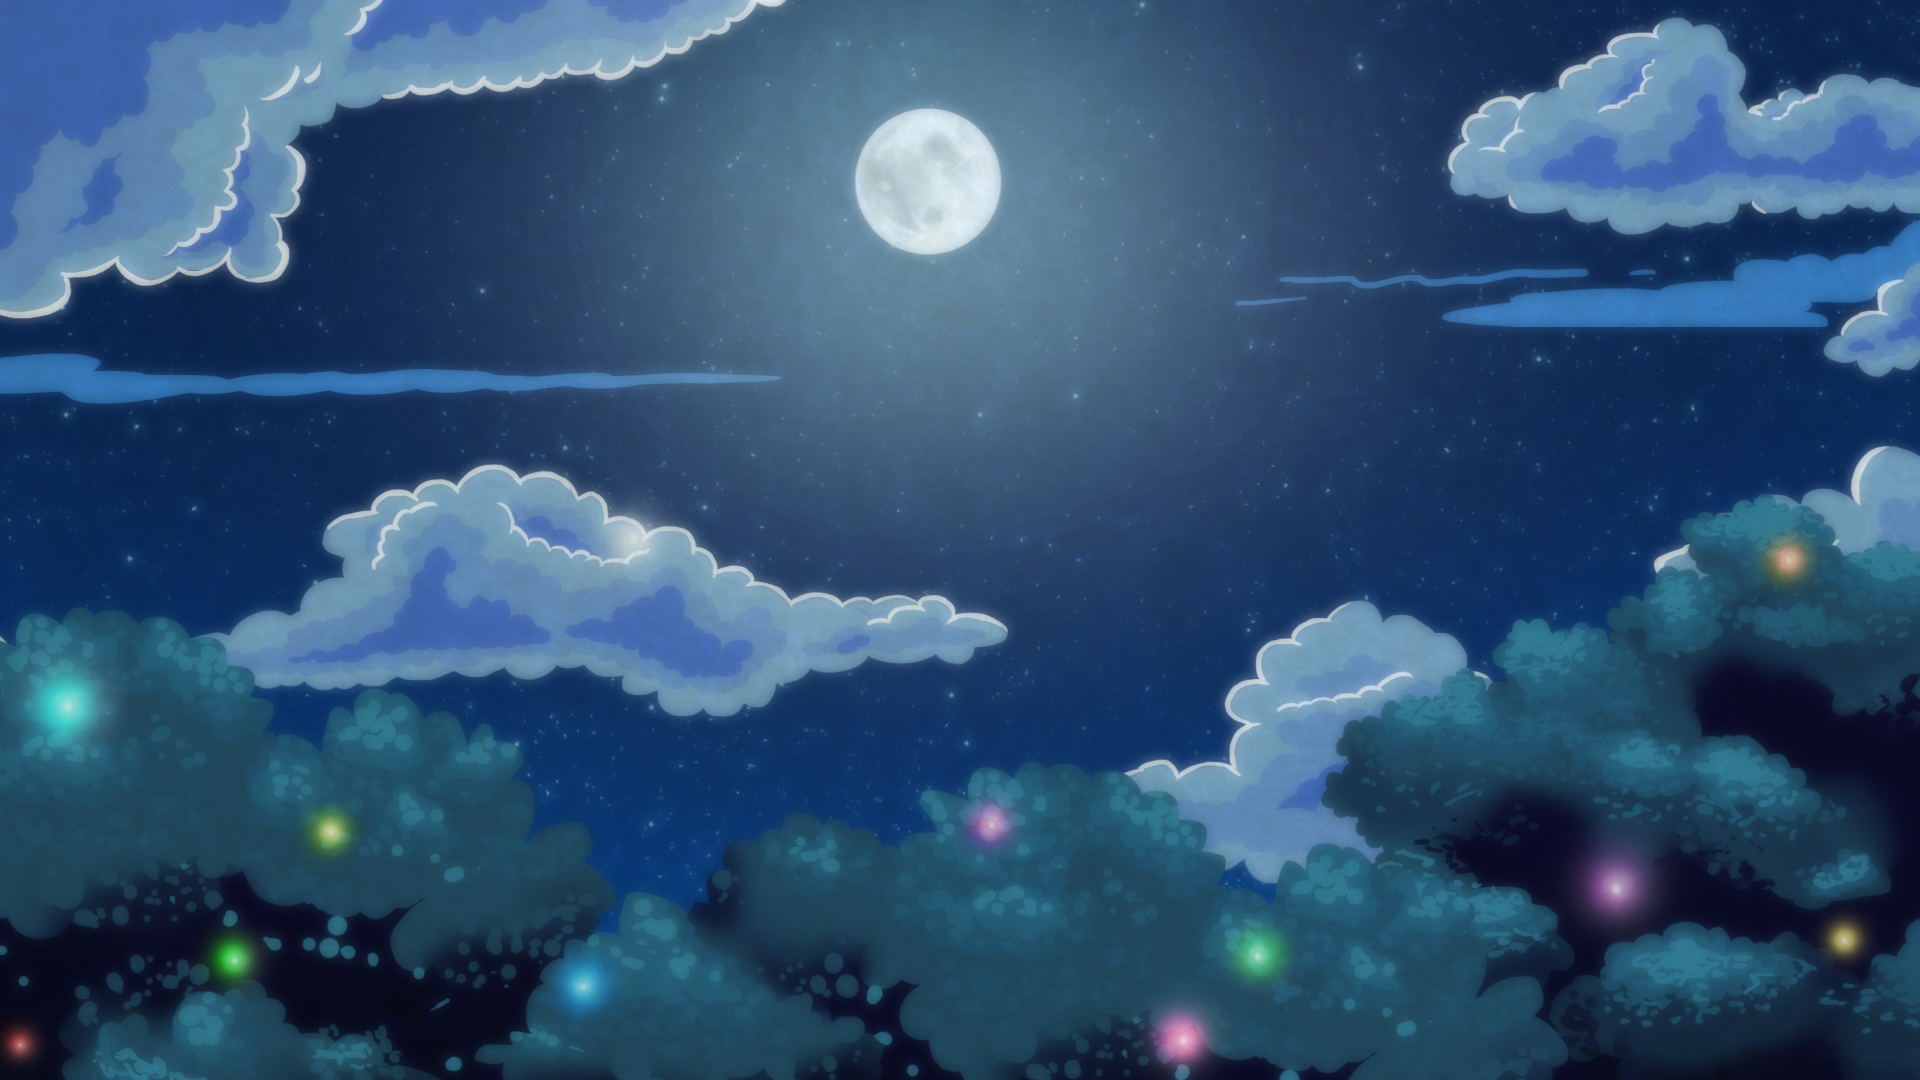 Anime Wallpaper Night Forest Illustration